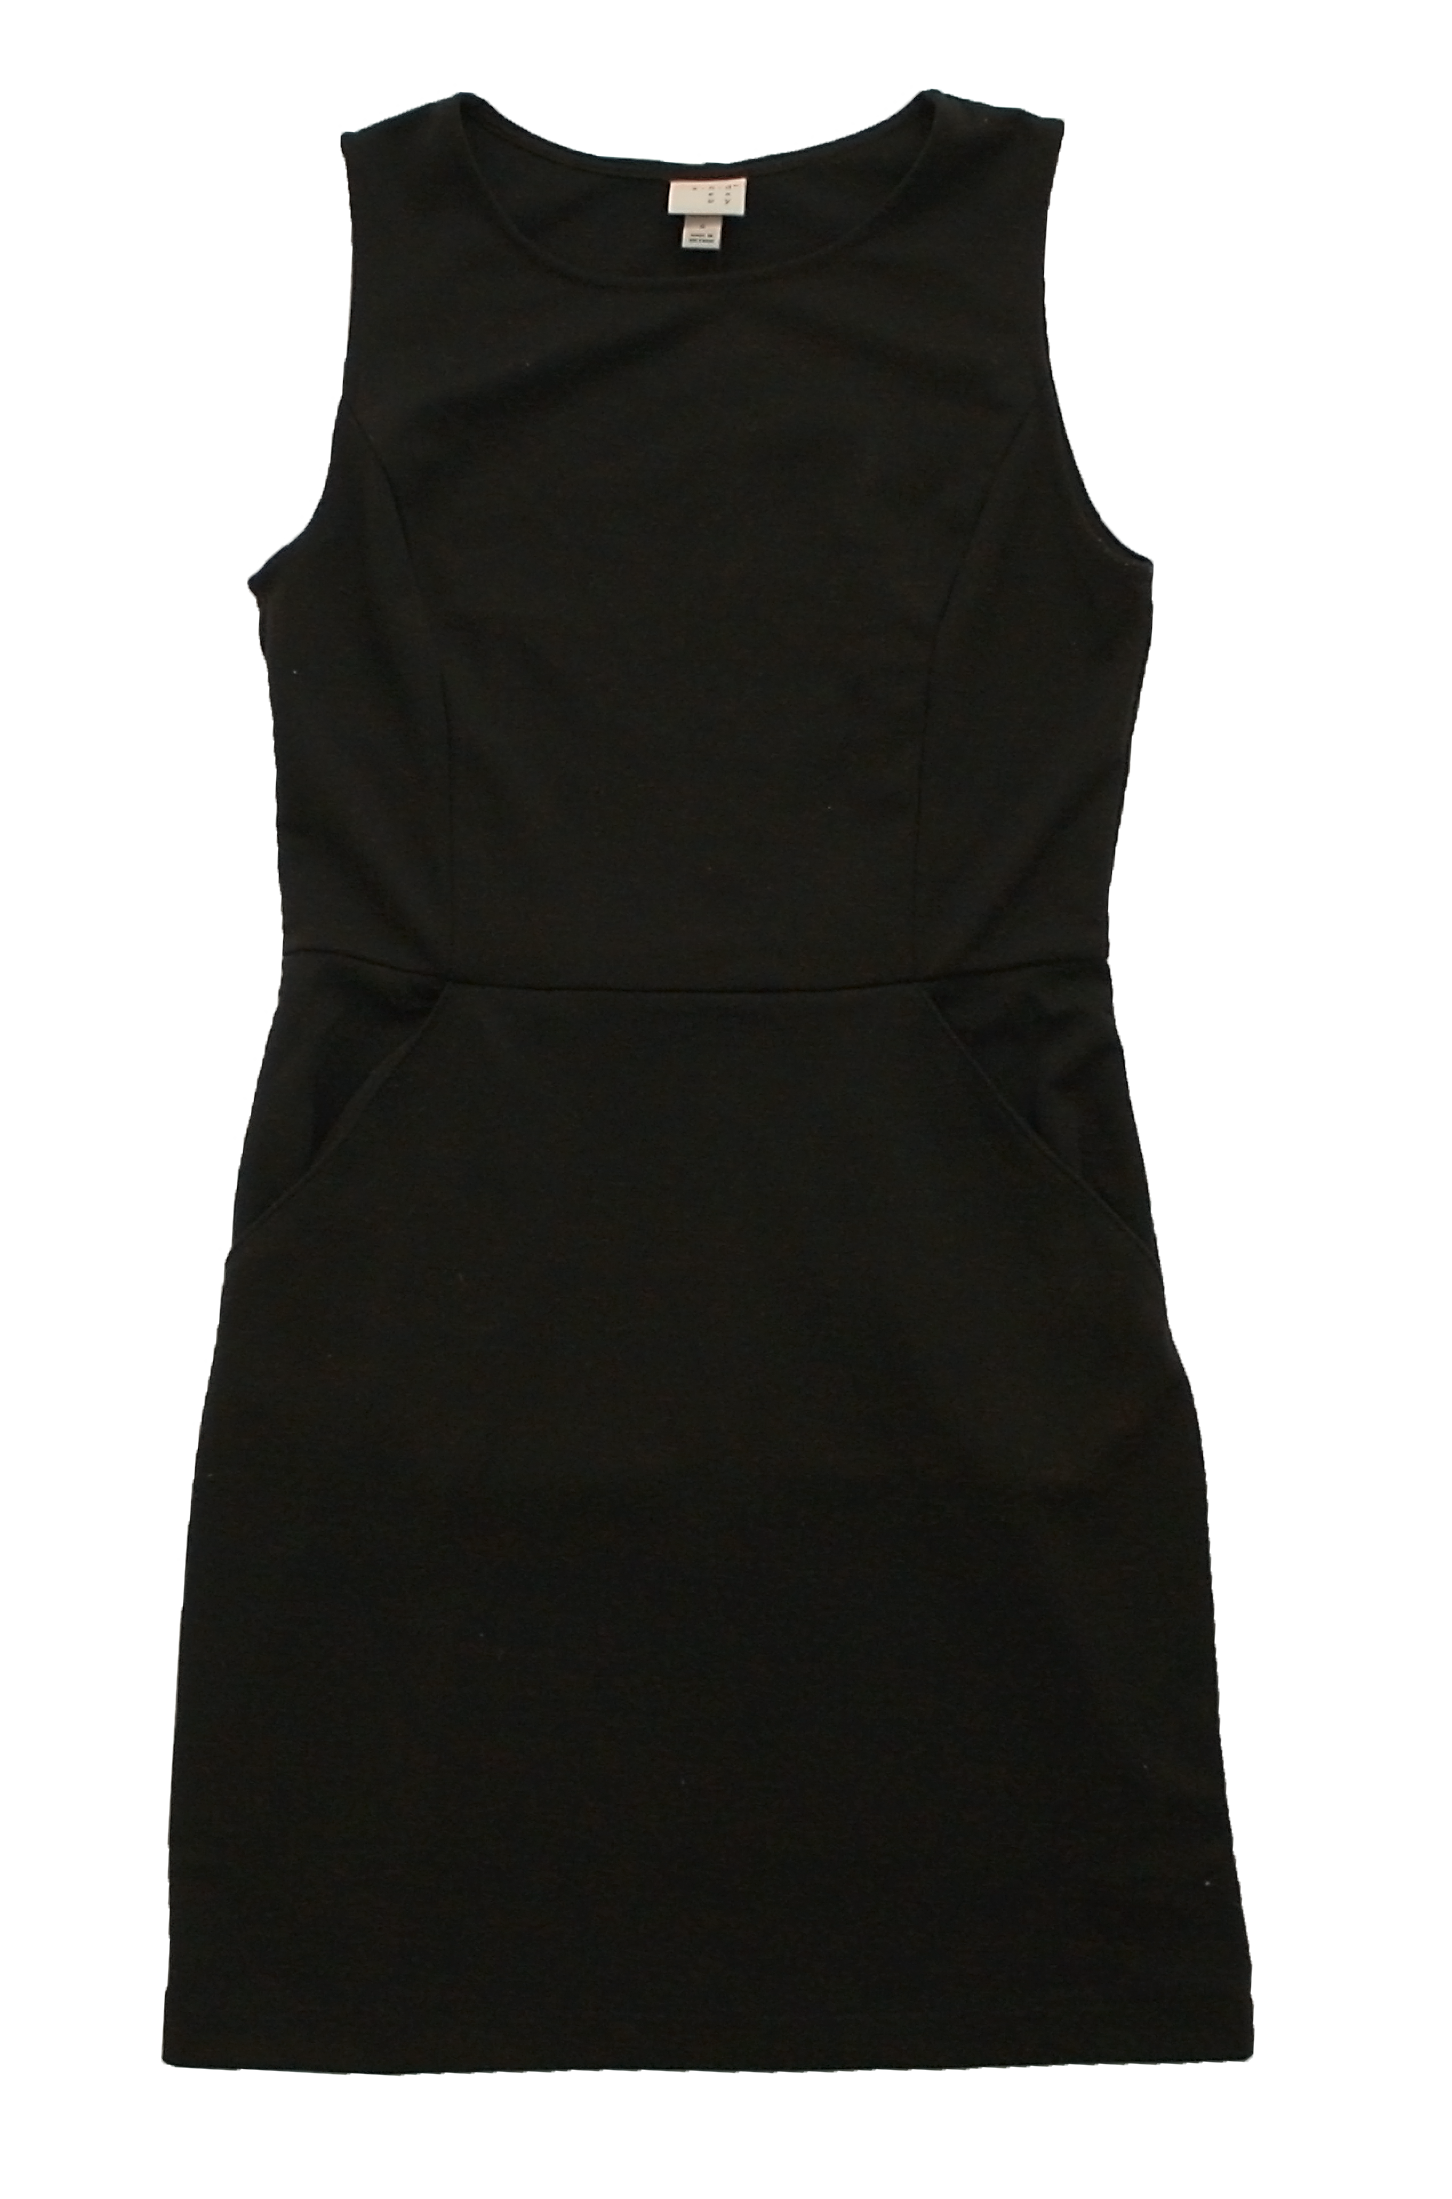 A black shift dress with pockets